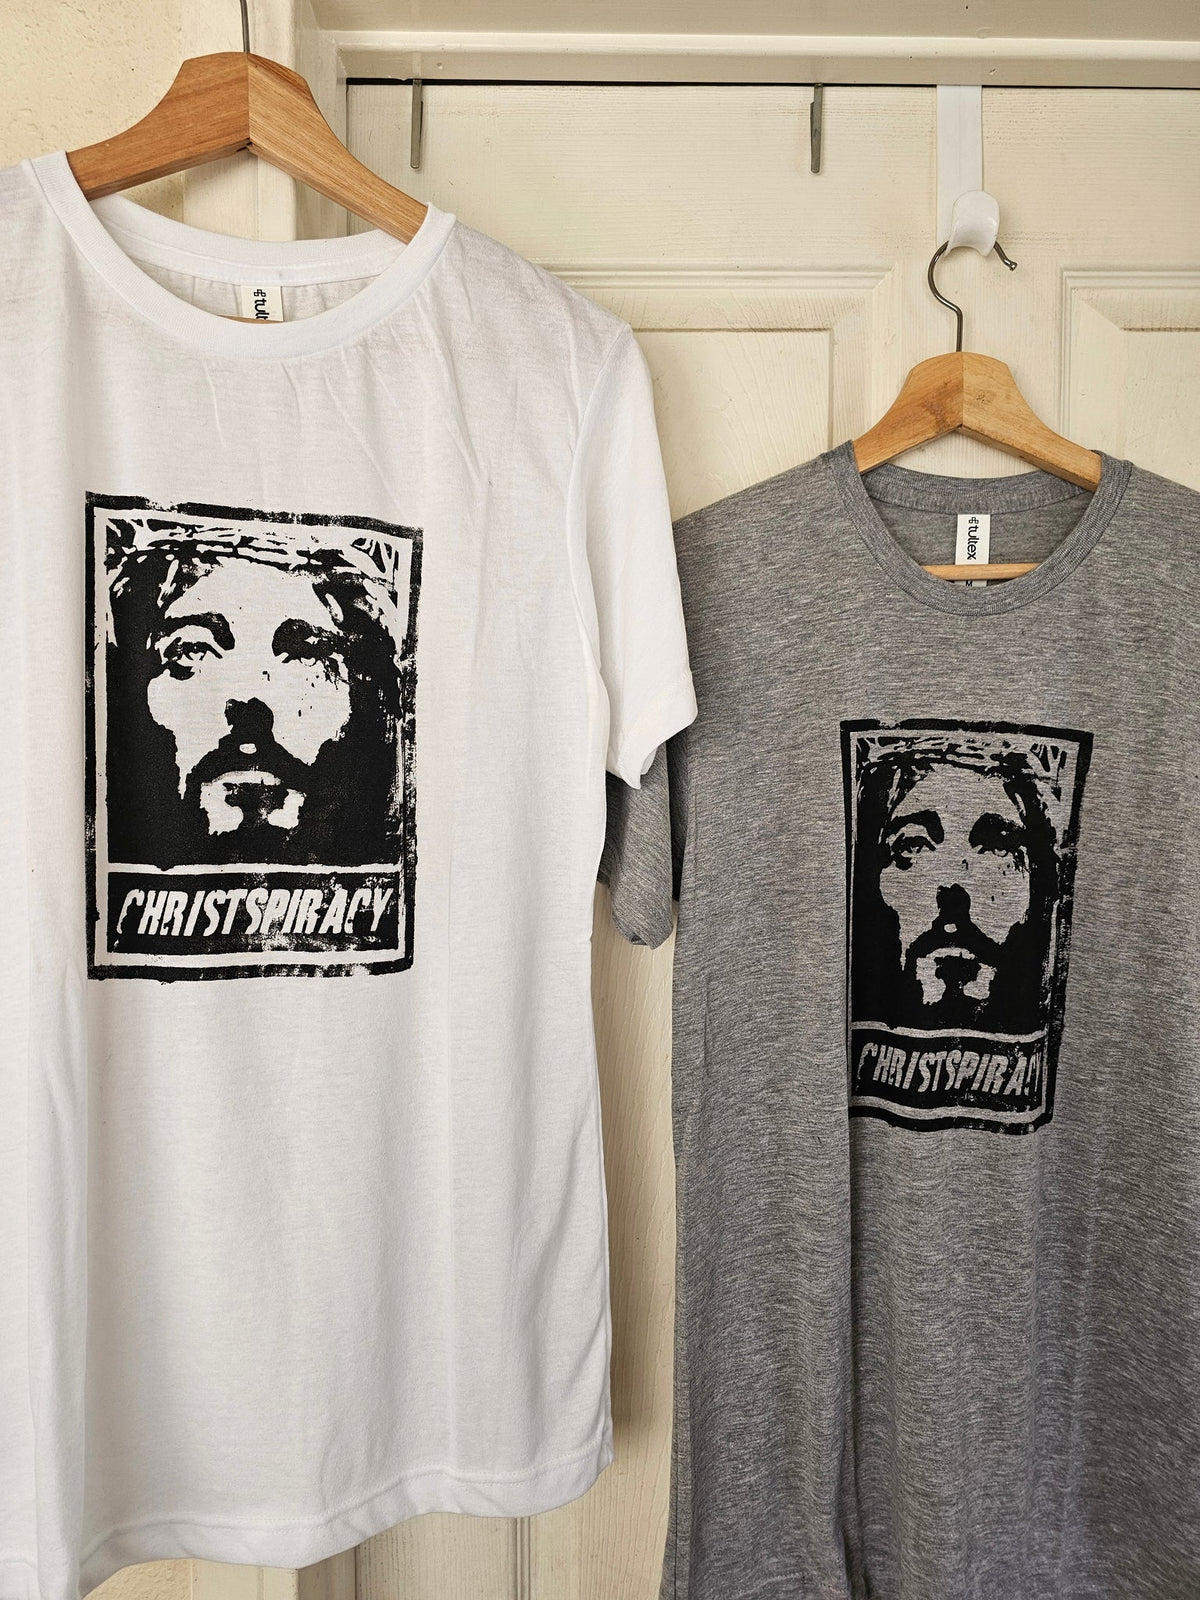 AUCTION - "Christspiracy" T-shirt